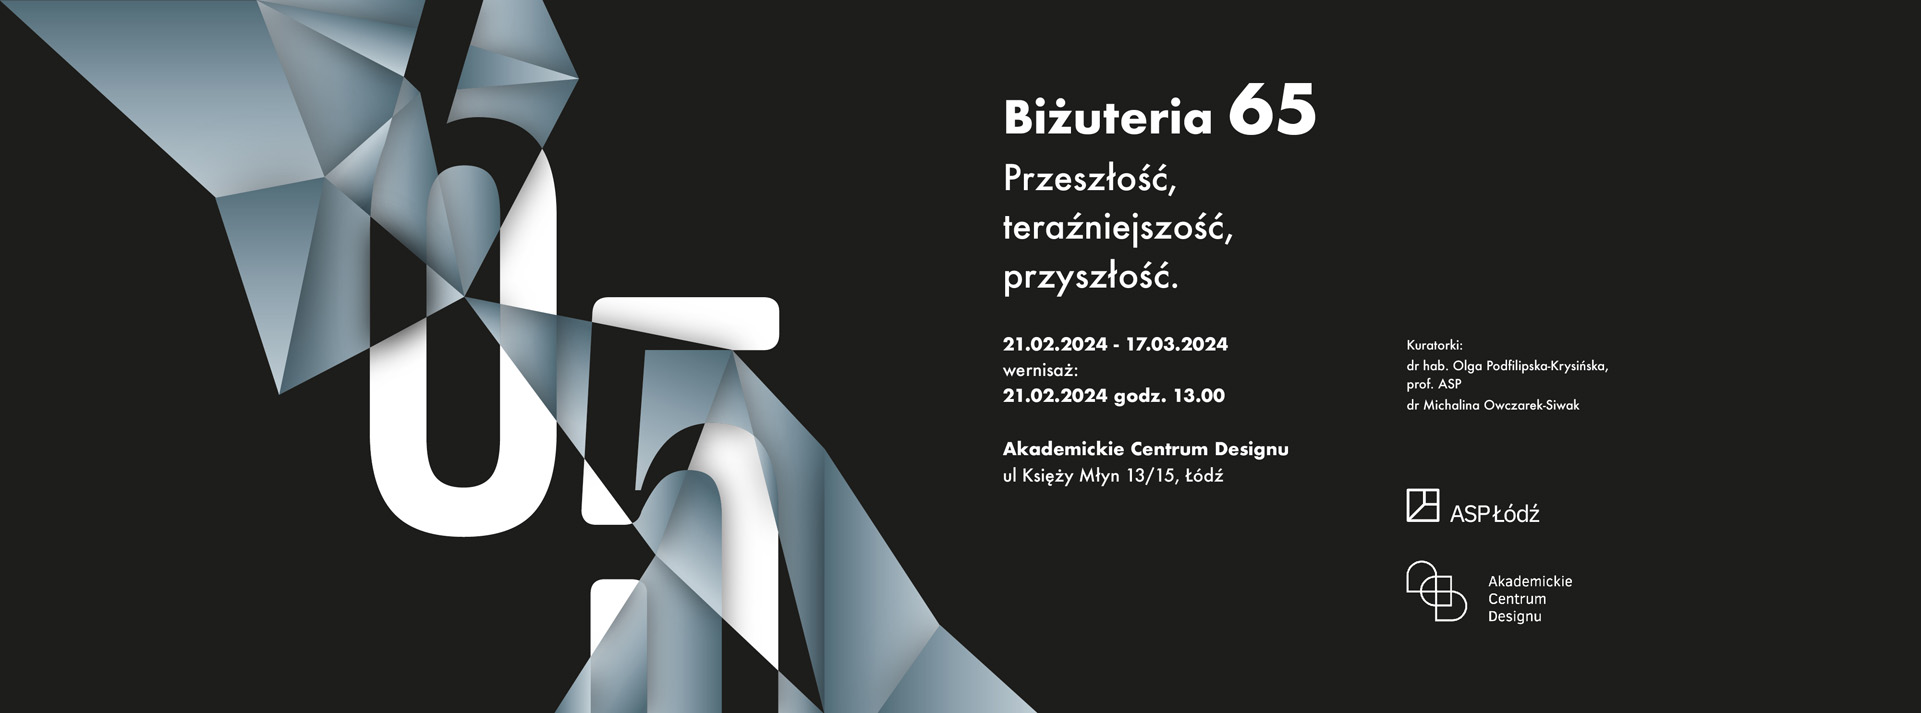 240317-bizuteria-65